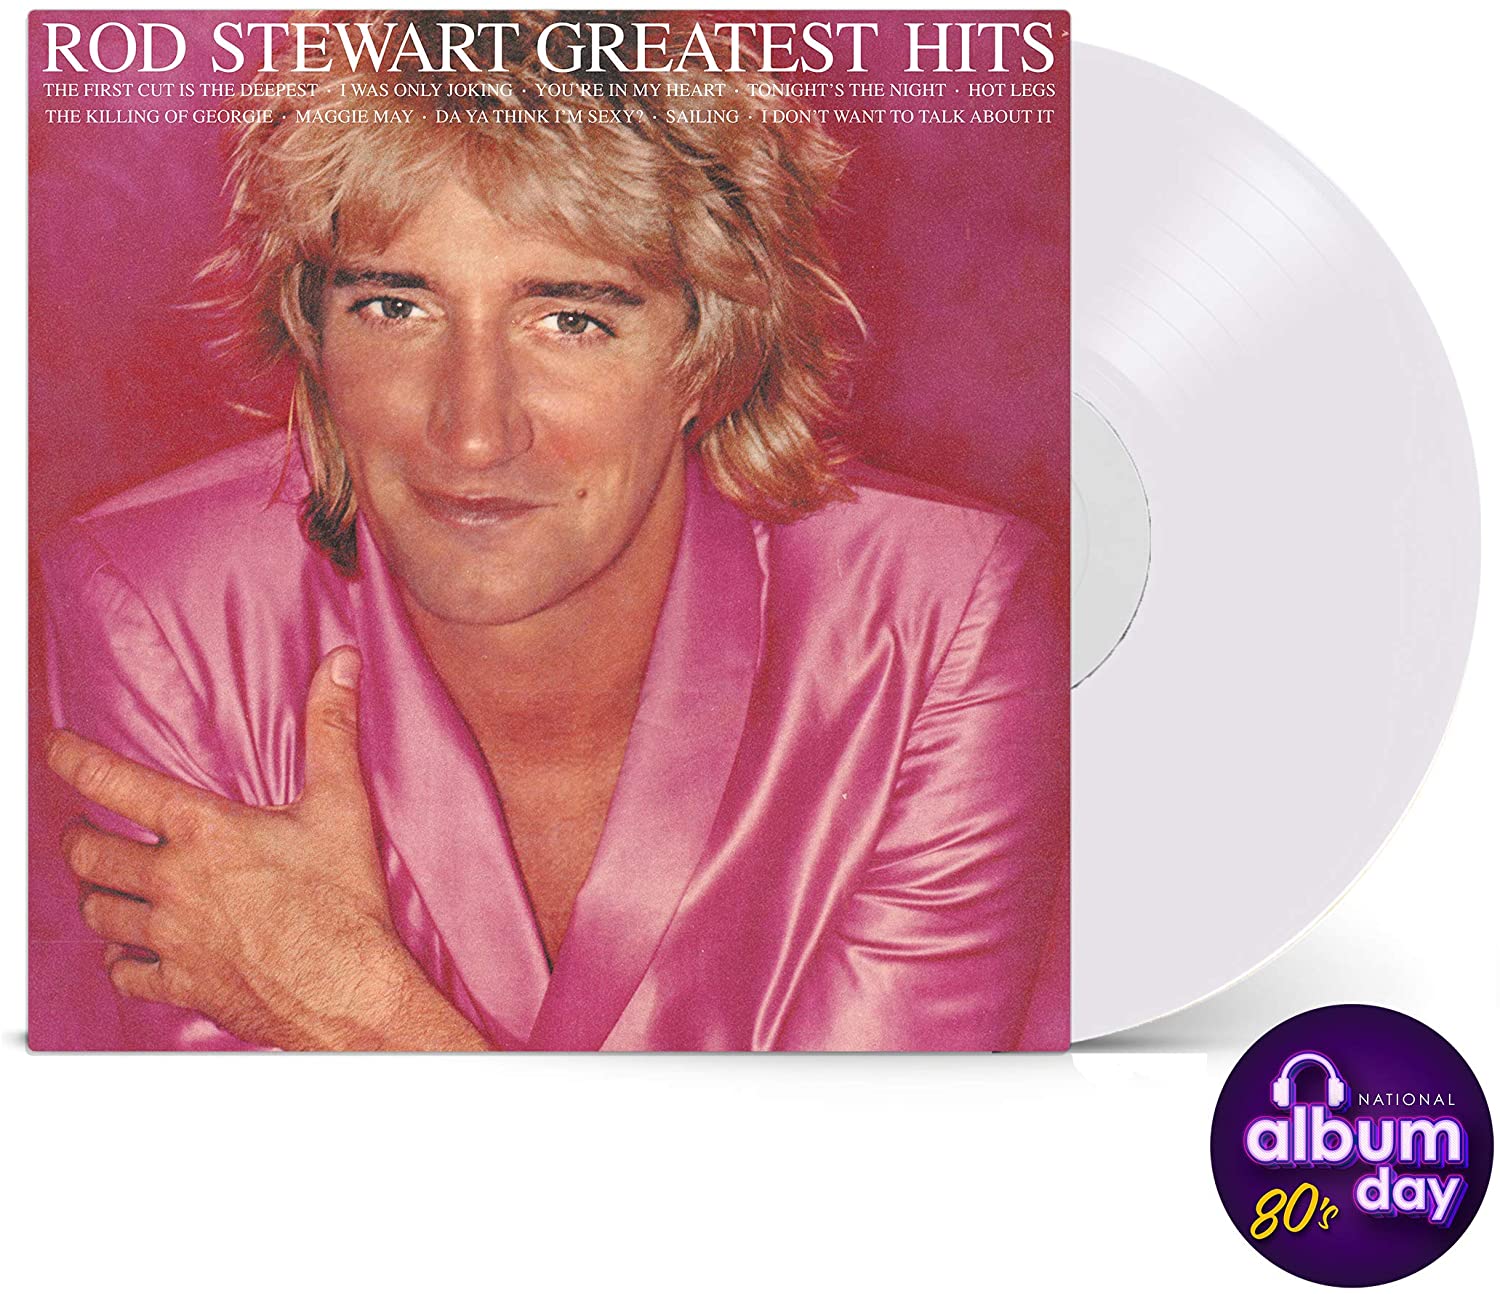 ROD STEWART - Greatest Hits Vol 1 - LP - Limited White Vinyl [NAD-OCT10]